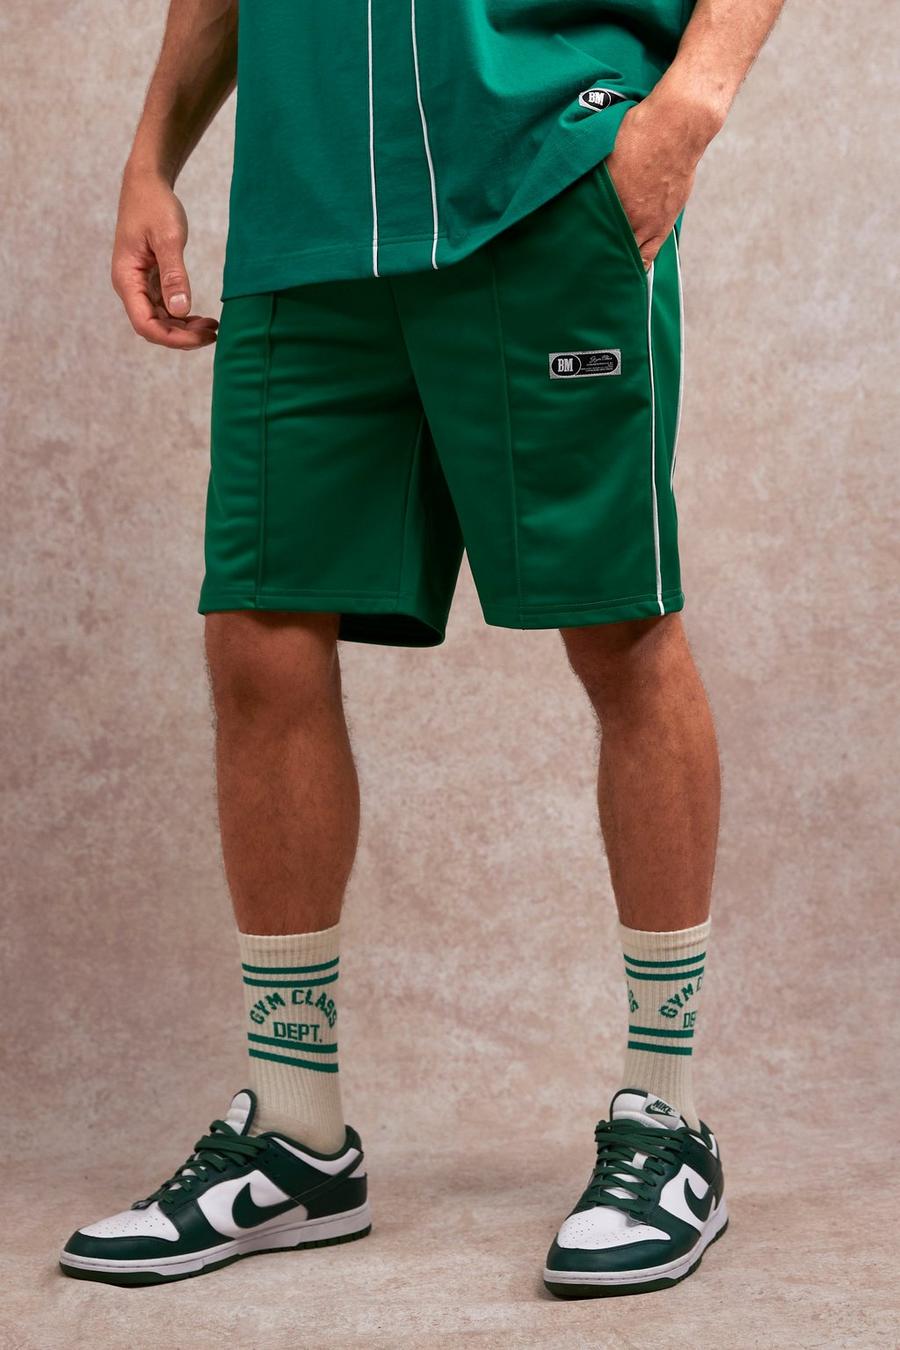 Pantalón corto holgado de tejido por urdimbre con estampado Gym Class, Green verde